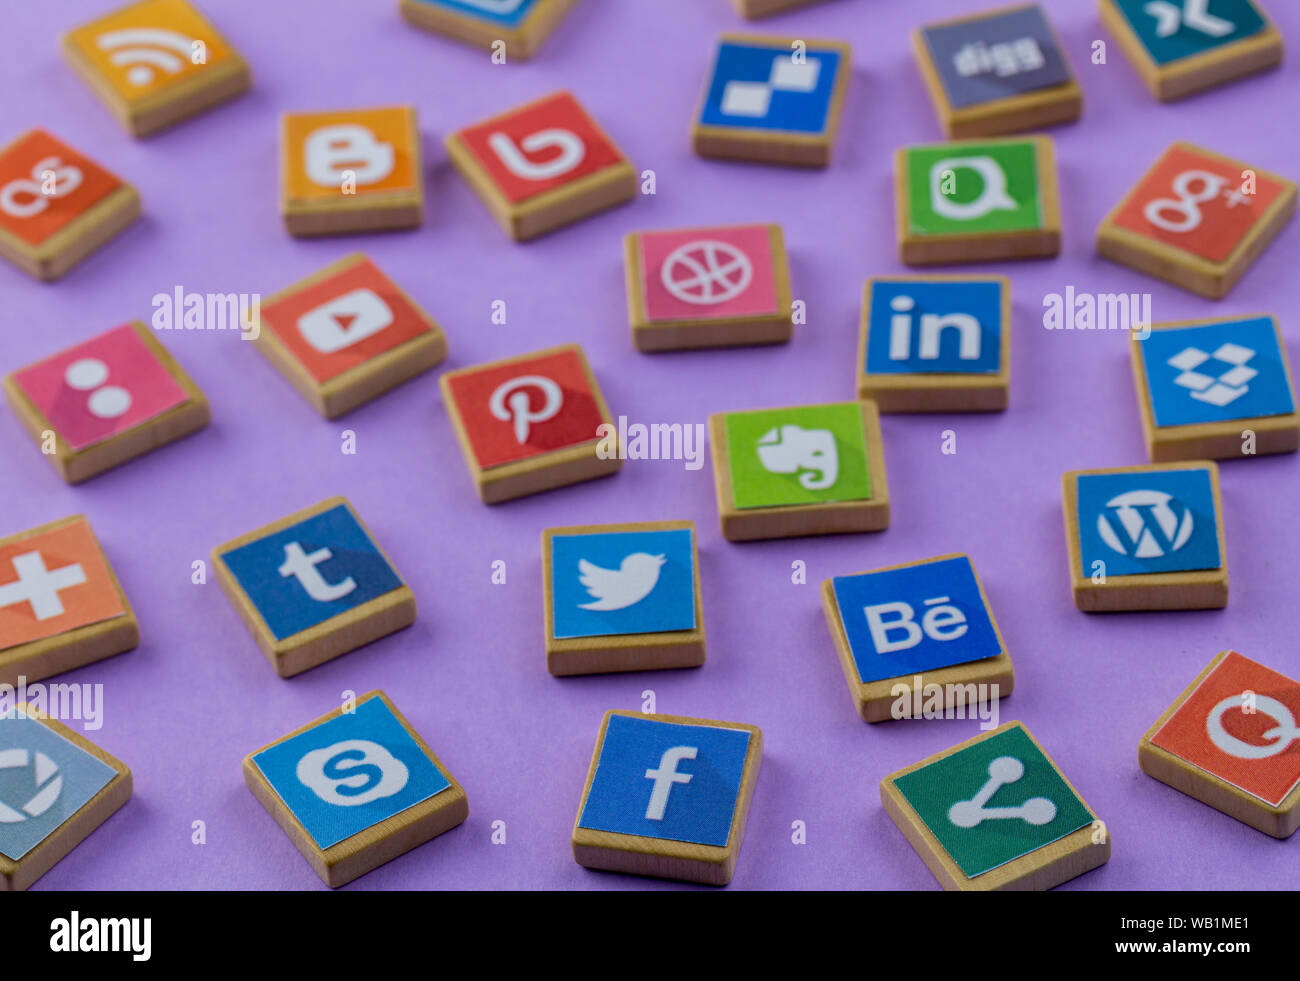 QUEENSTOWN, SÜDAFRIKA - vom 6. Juli 2019 - Social Media Hintergrund mit Social Media Logos auf Holz- spiel Blöcke auf lila Hintergrund - Social Networking Stockfoto